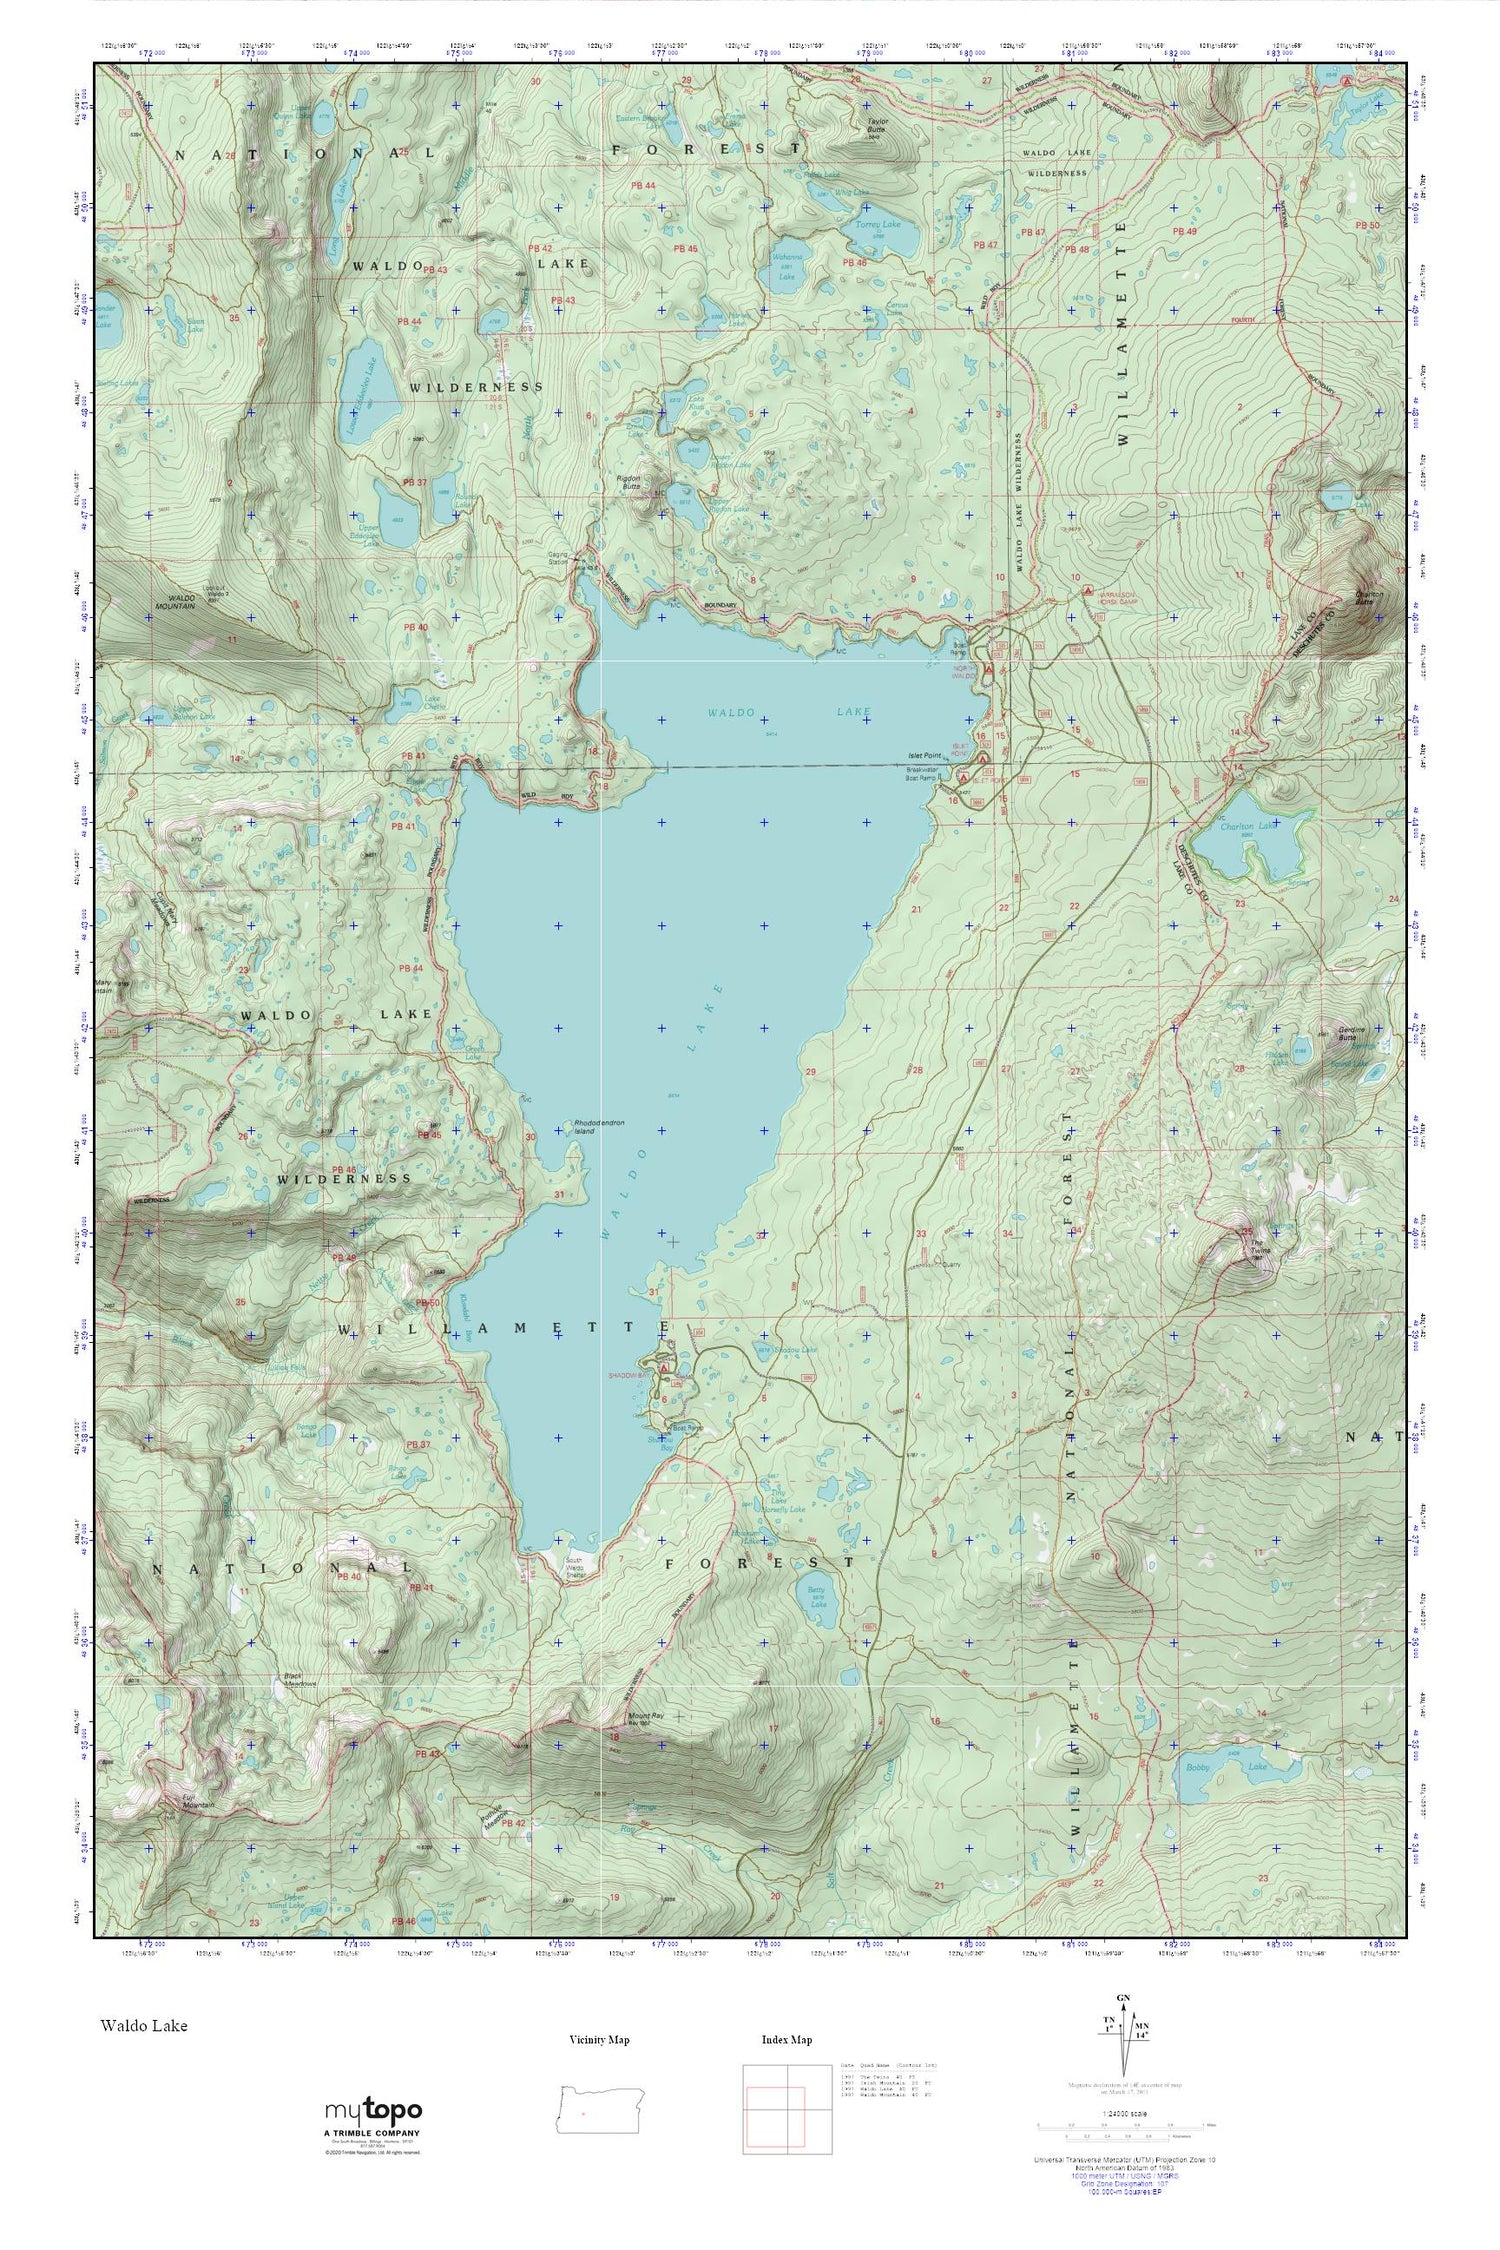 Waldo Lake MyTopo Explorer Series Map Image